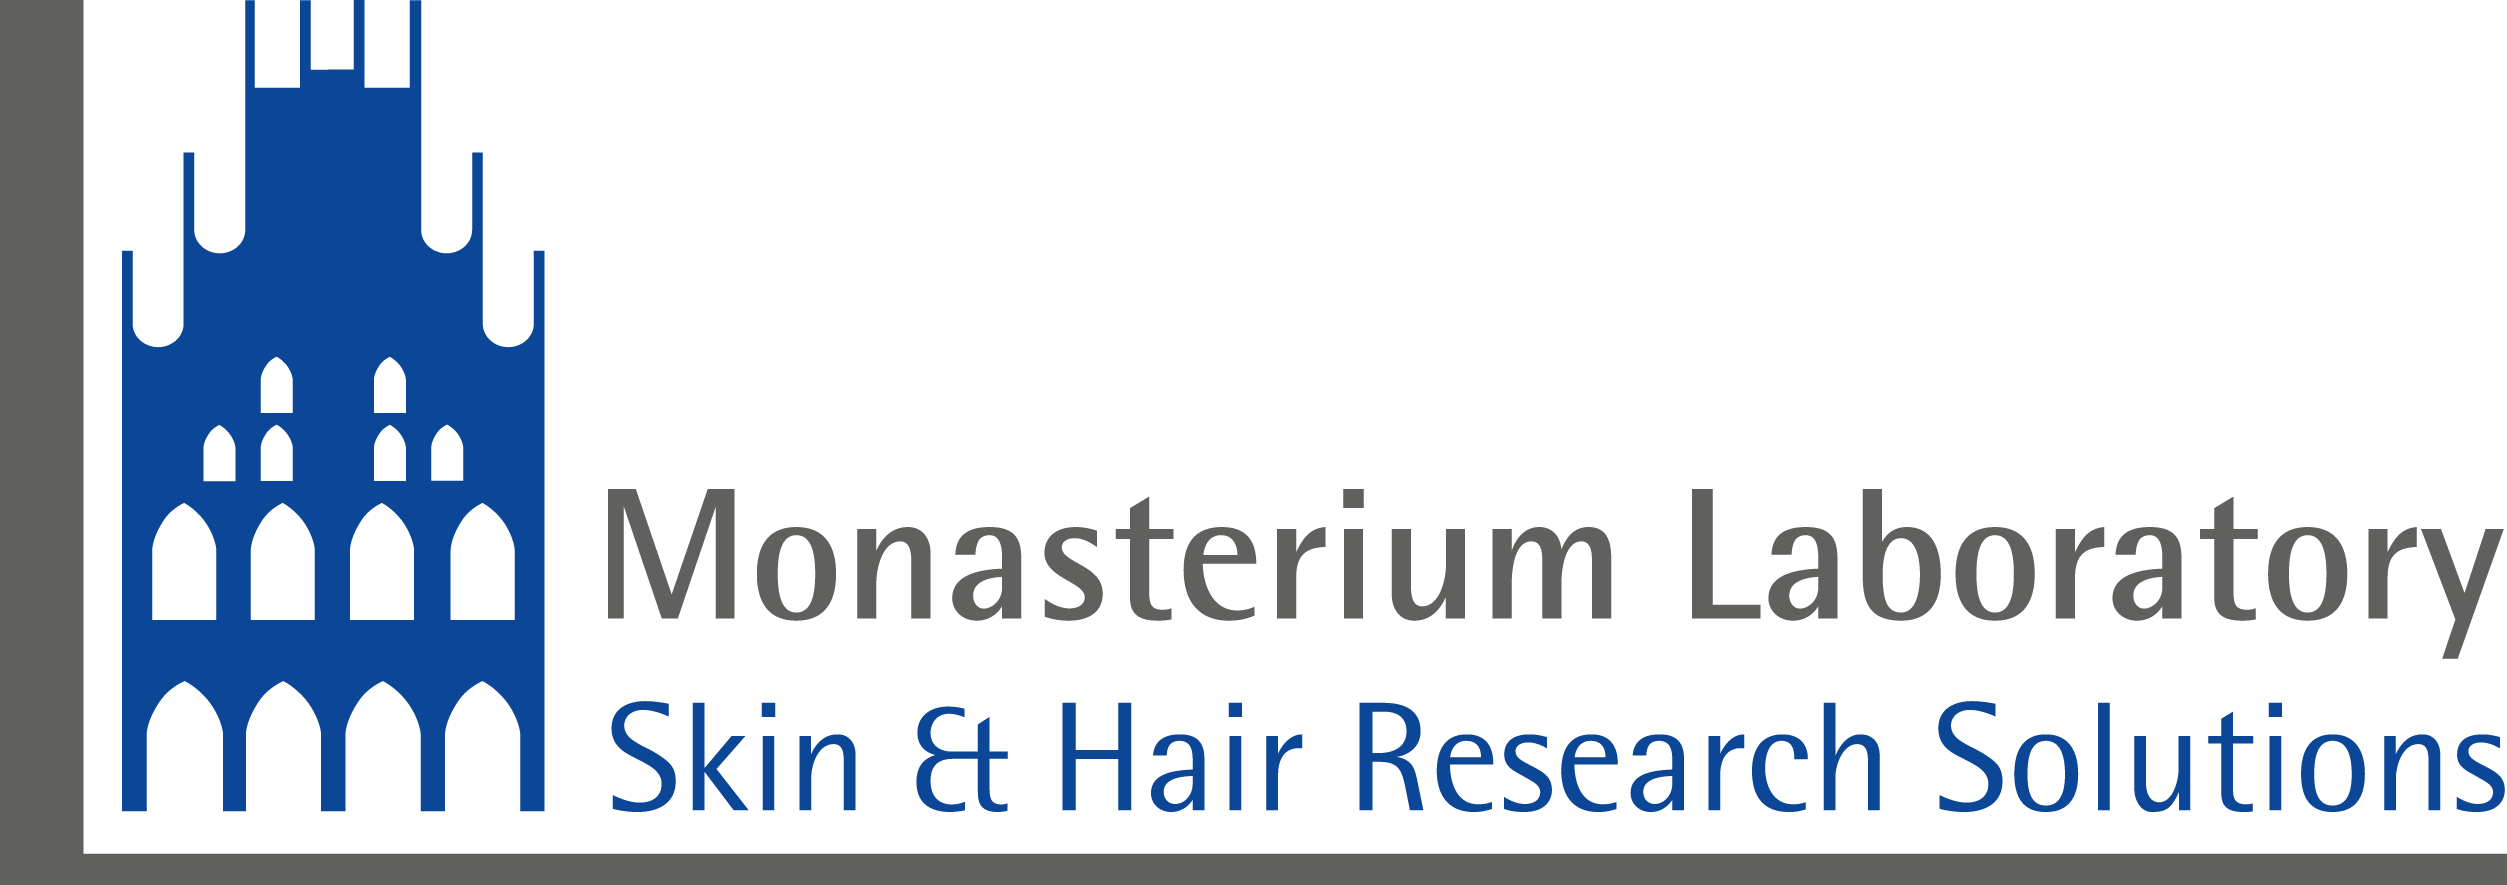 Physician Liaison, Biobanking & Ethics Officer (m/w/d) - Monasterium Laboratory GmbH - Logo